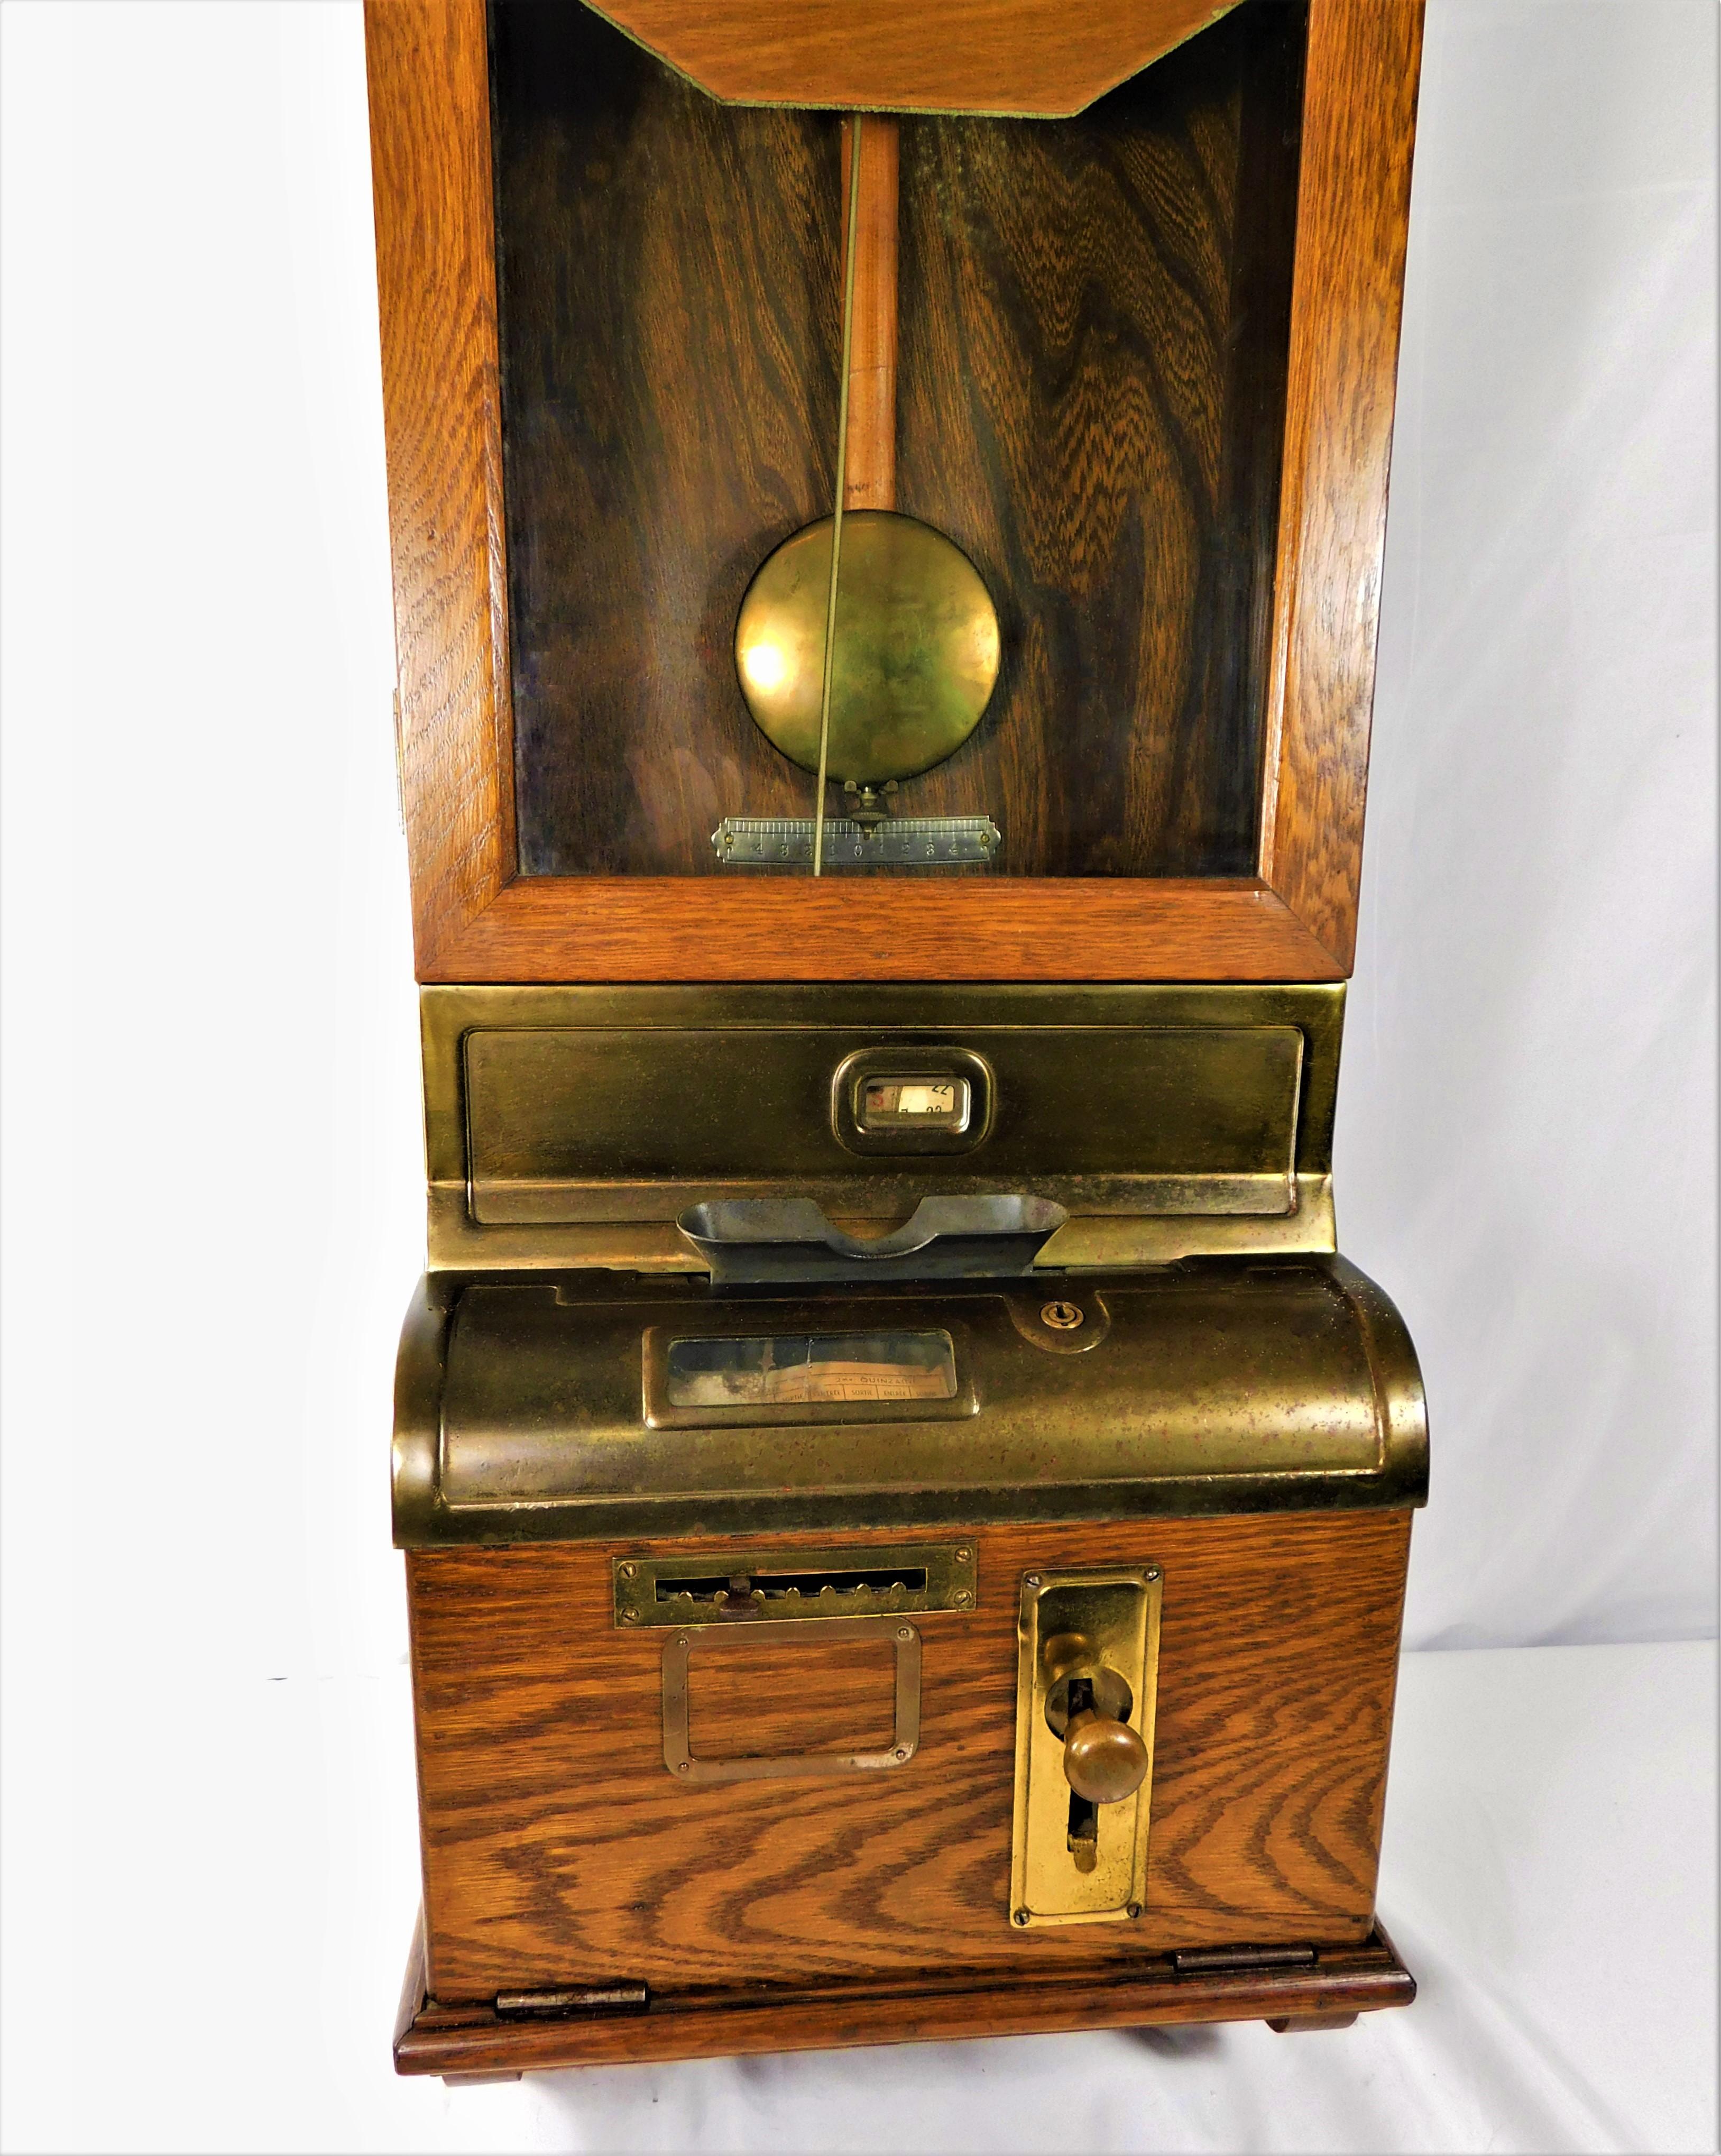 Machine Age Antique International Time Recording Punch Card Wall Clock, Circa 1900